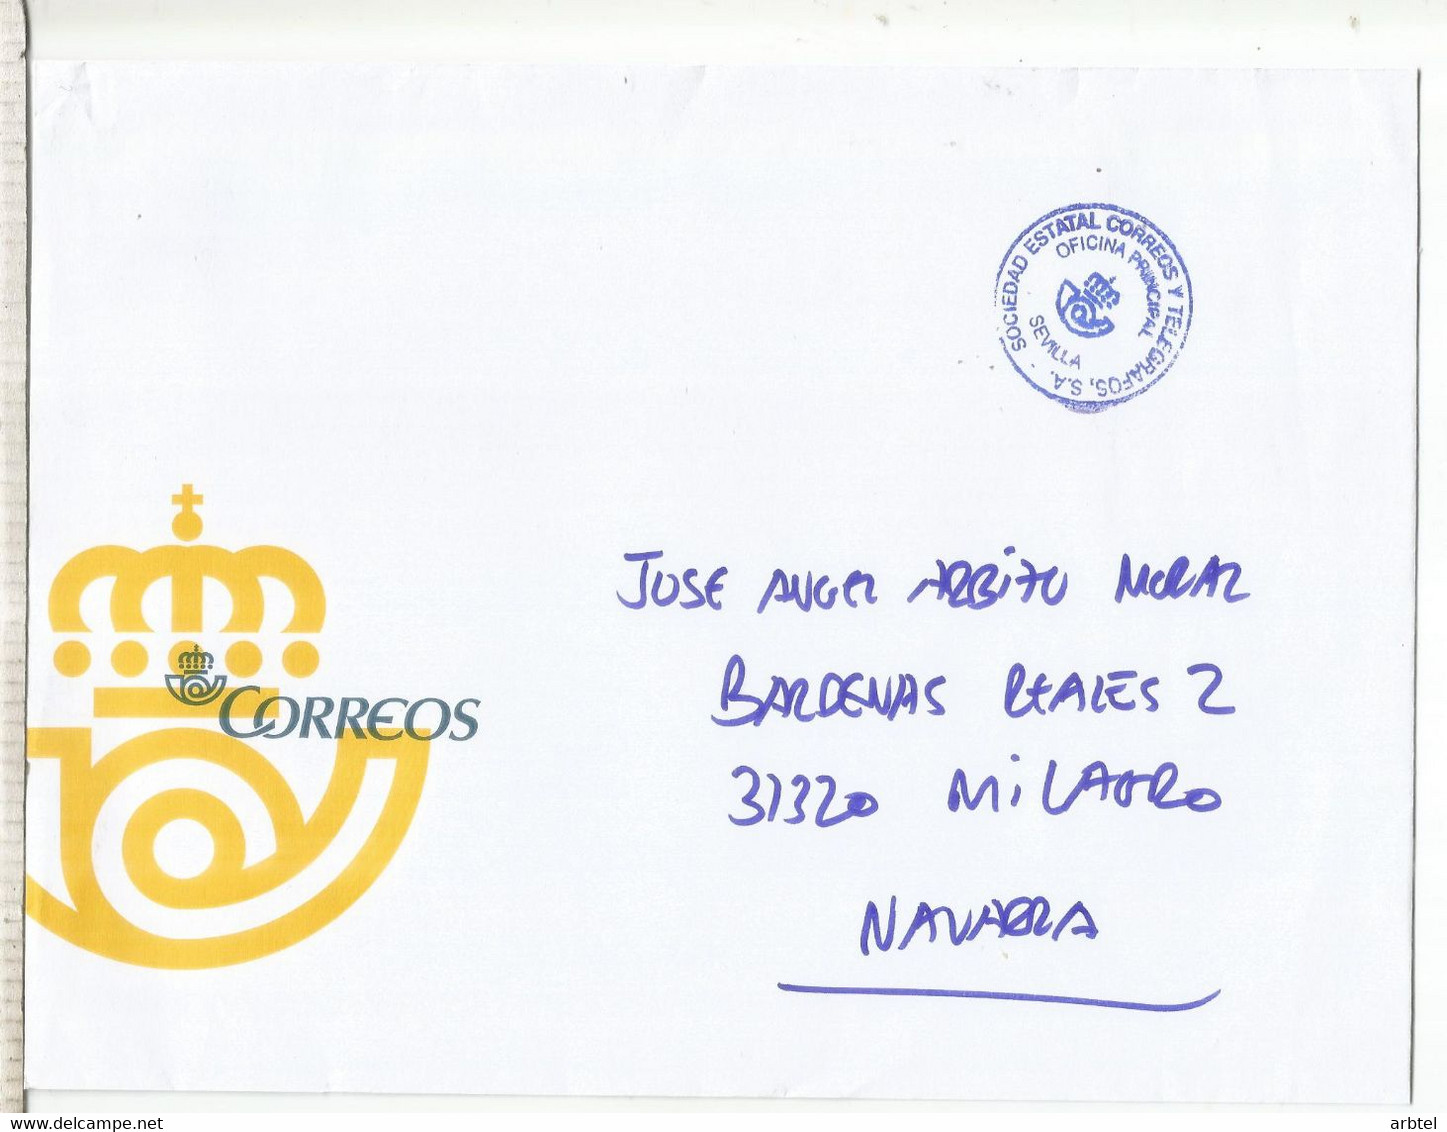 SEVILLA OP CC FRANQUICIA CORREOS - Franquicia Postal